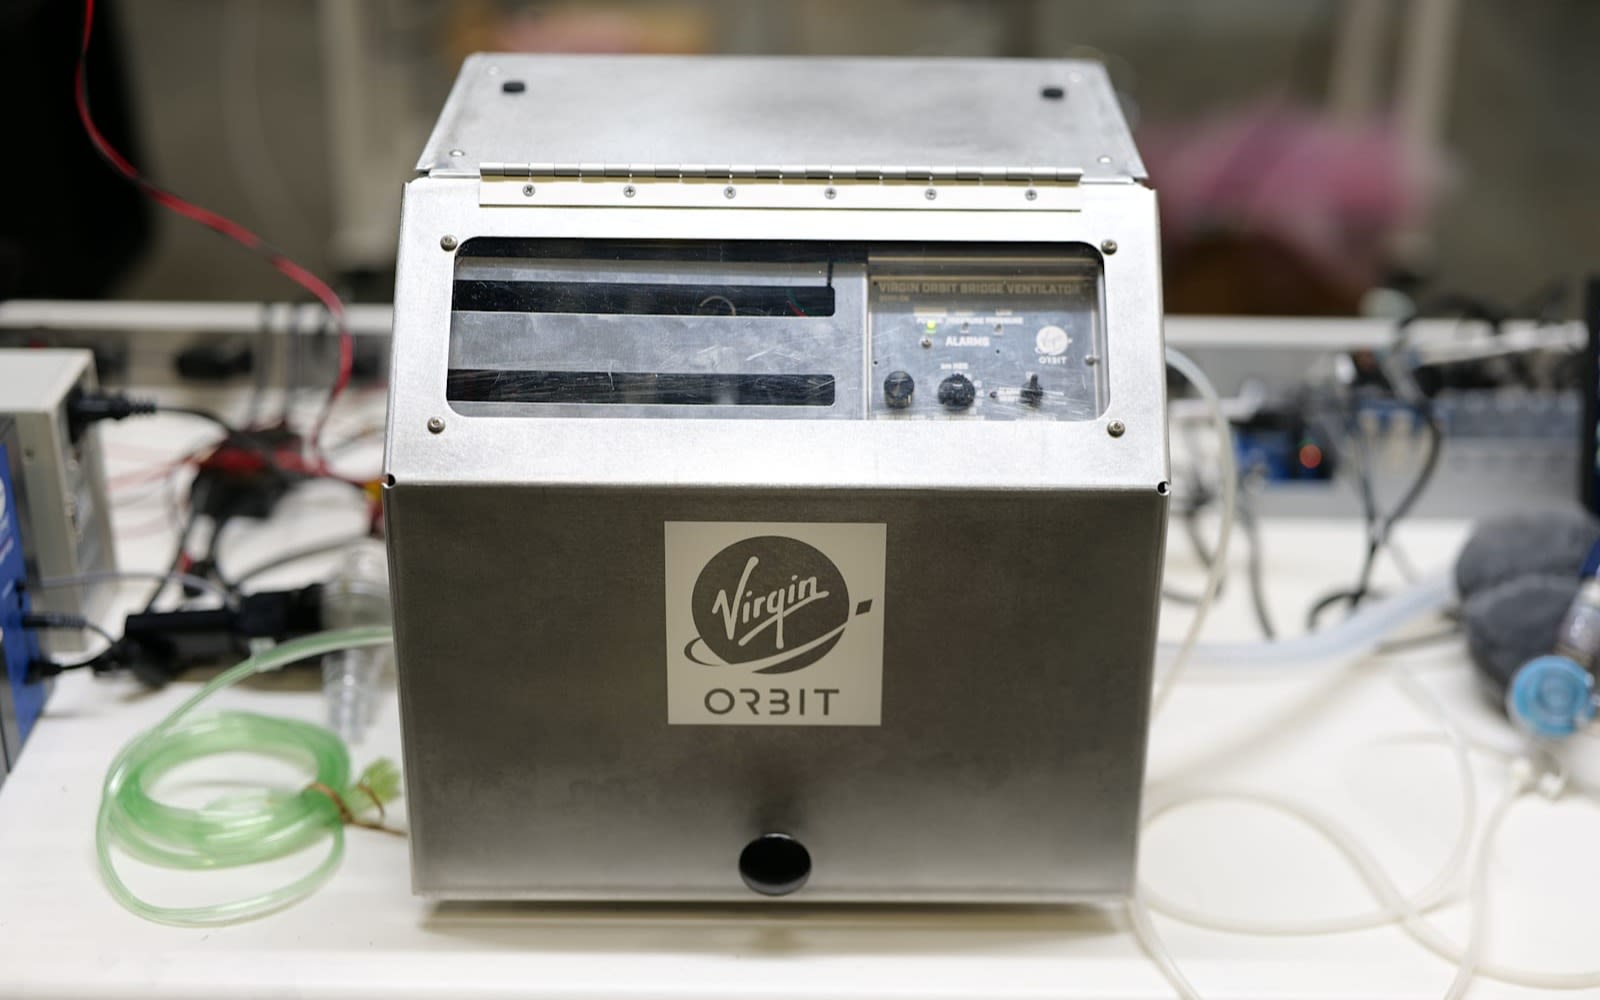 Silver cased ventilator on work bench with Virgin Orbit logo